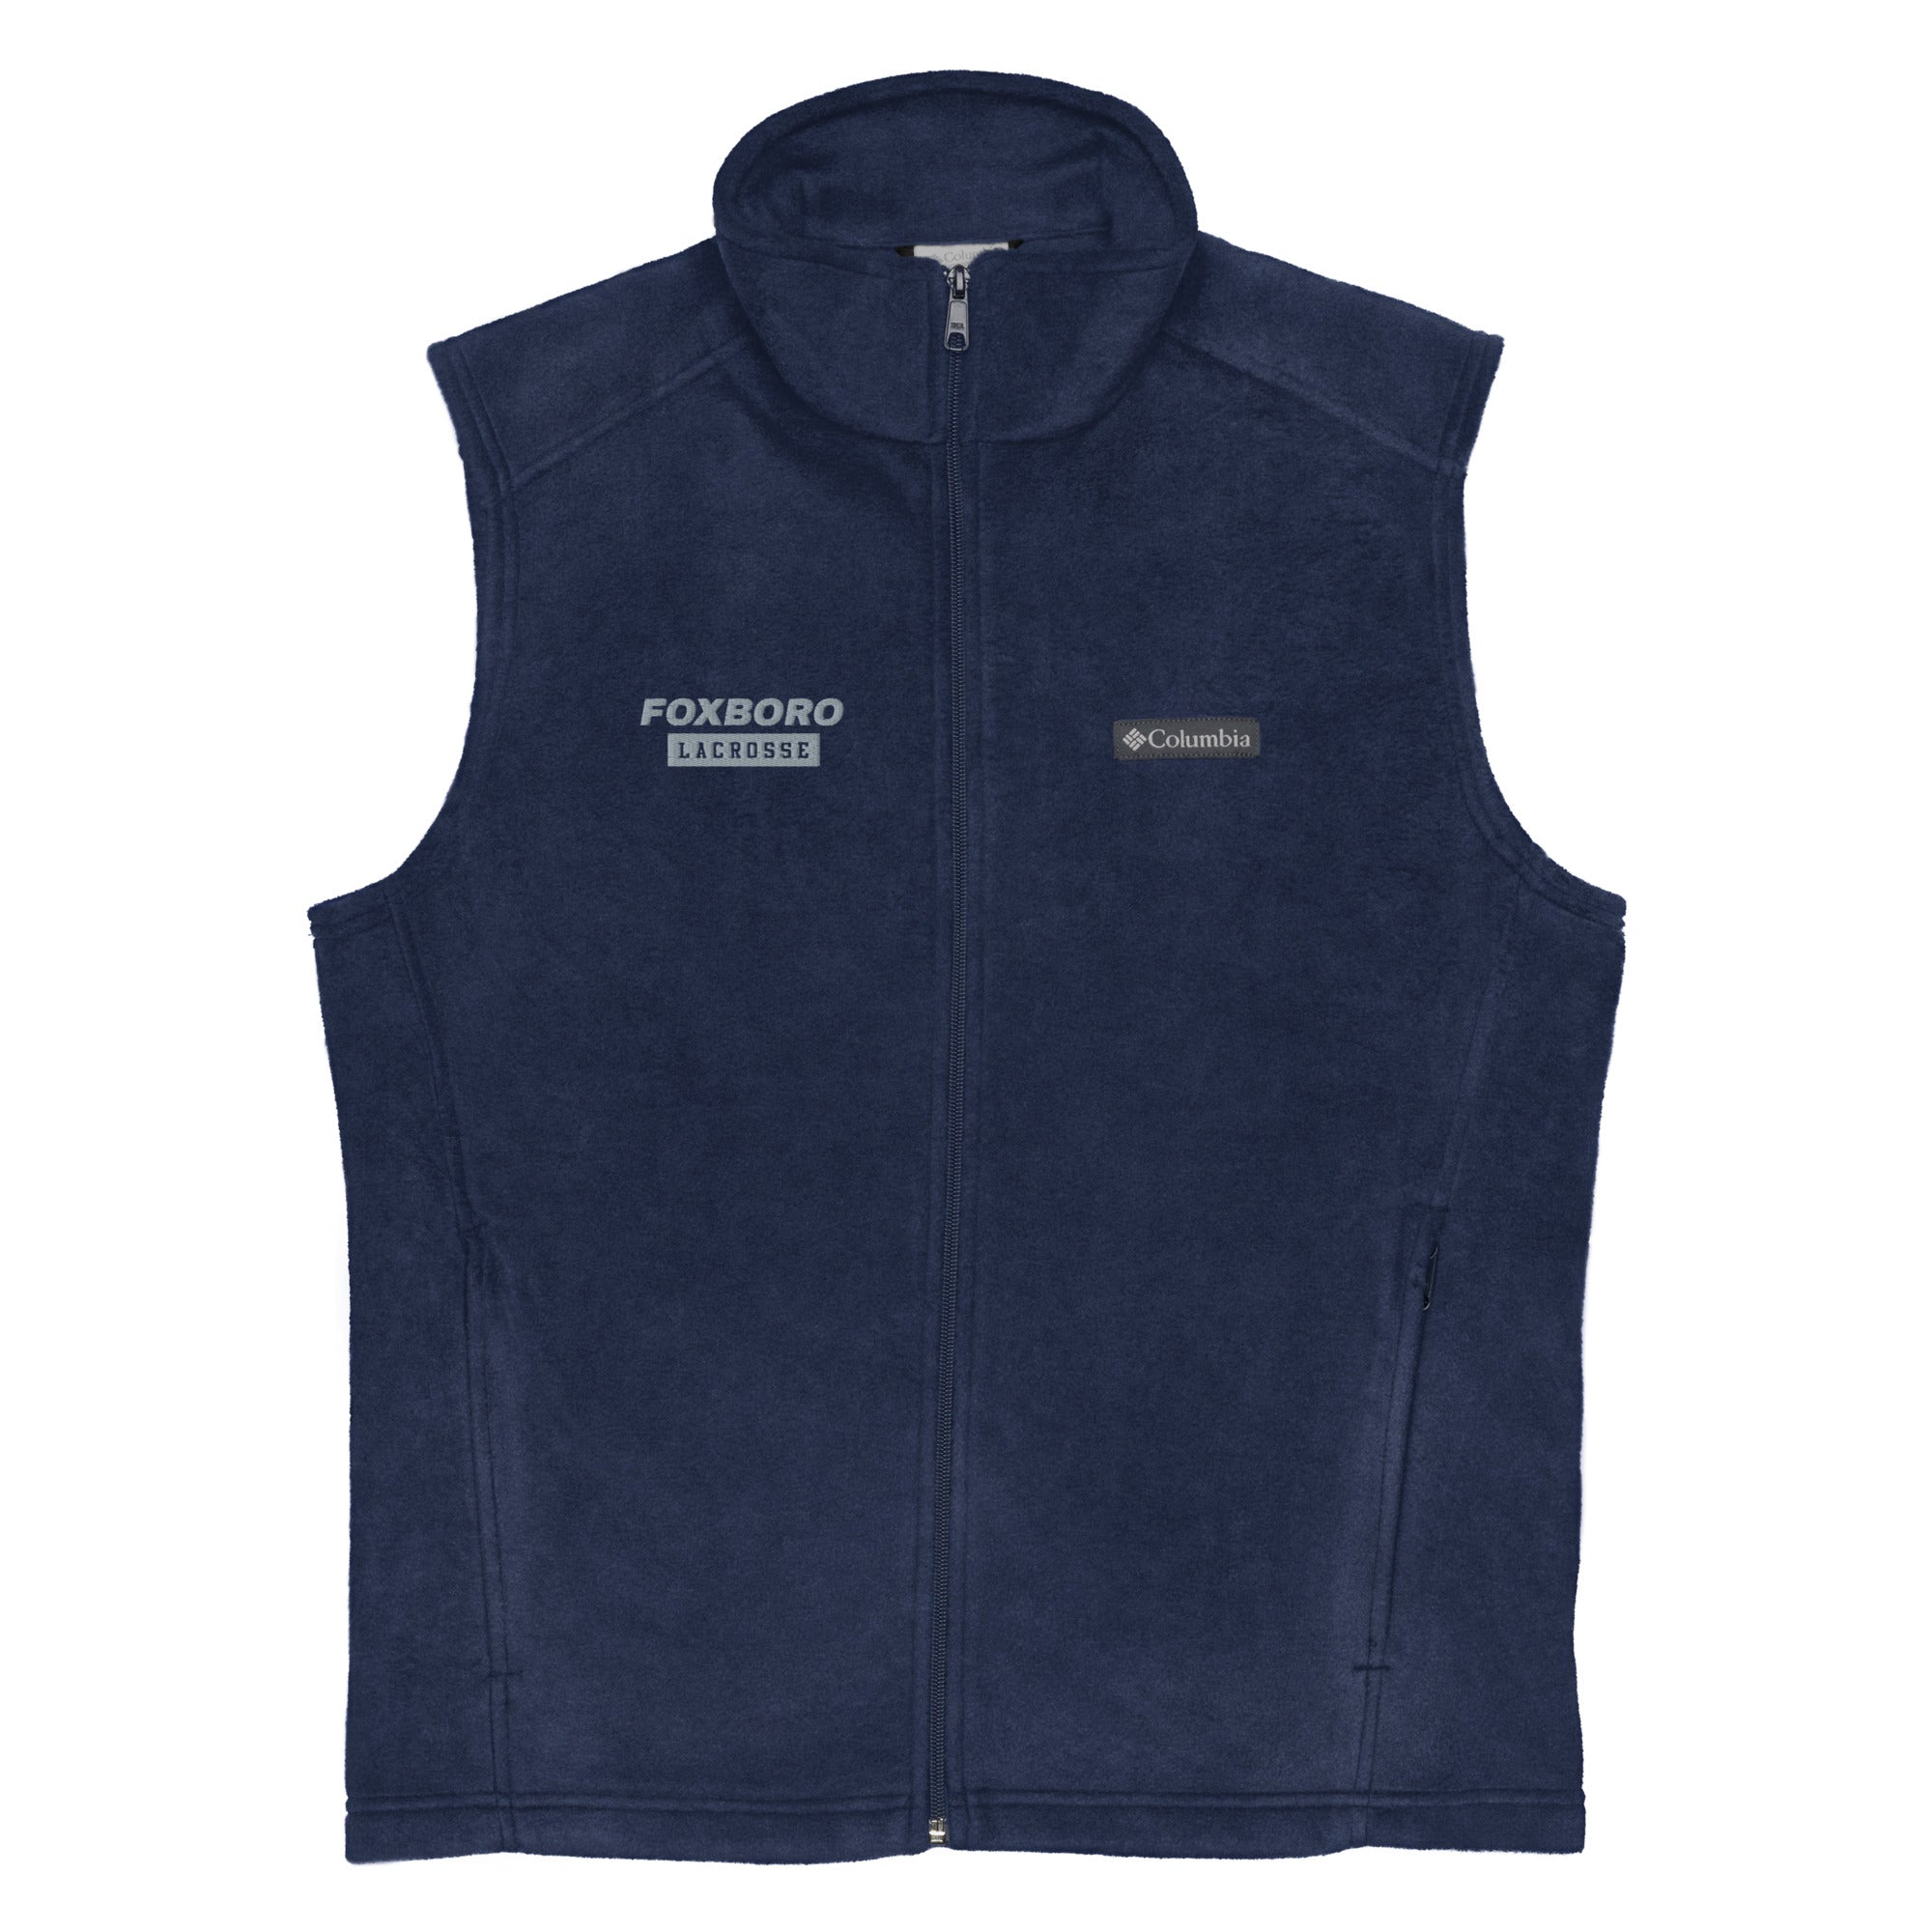 Foxboro Men’s Columbia fleece vest